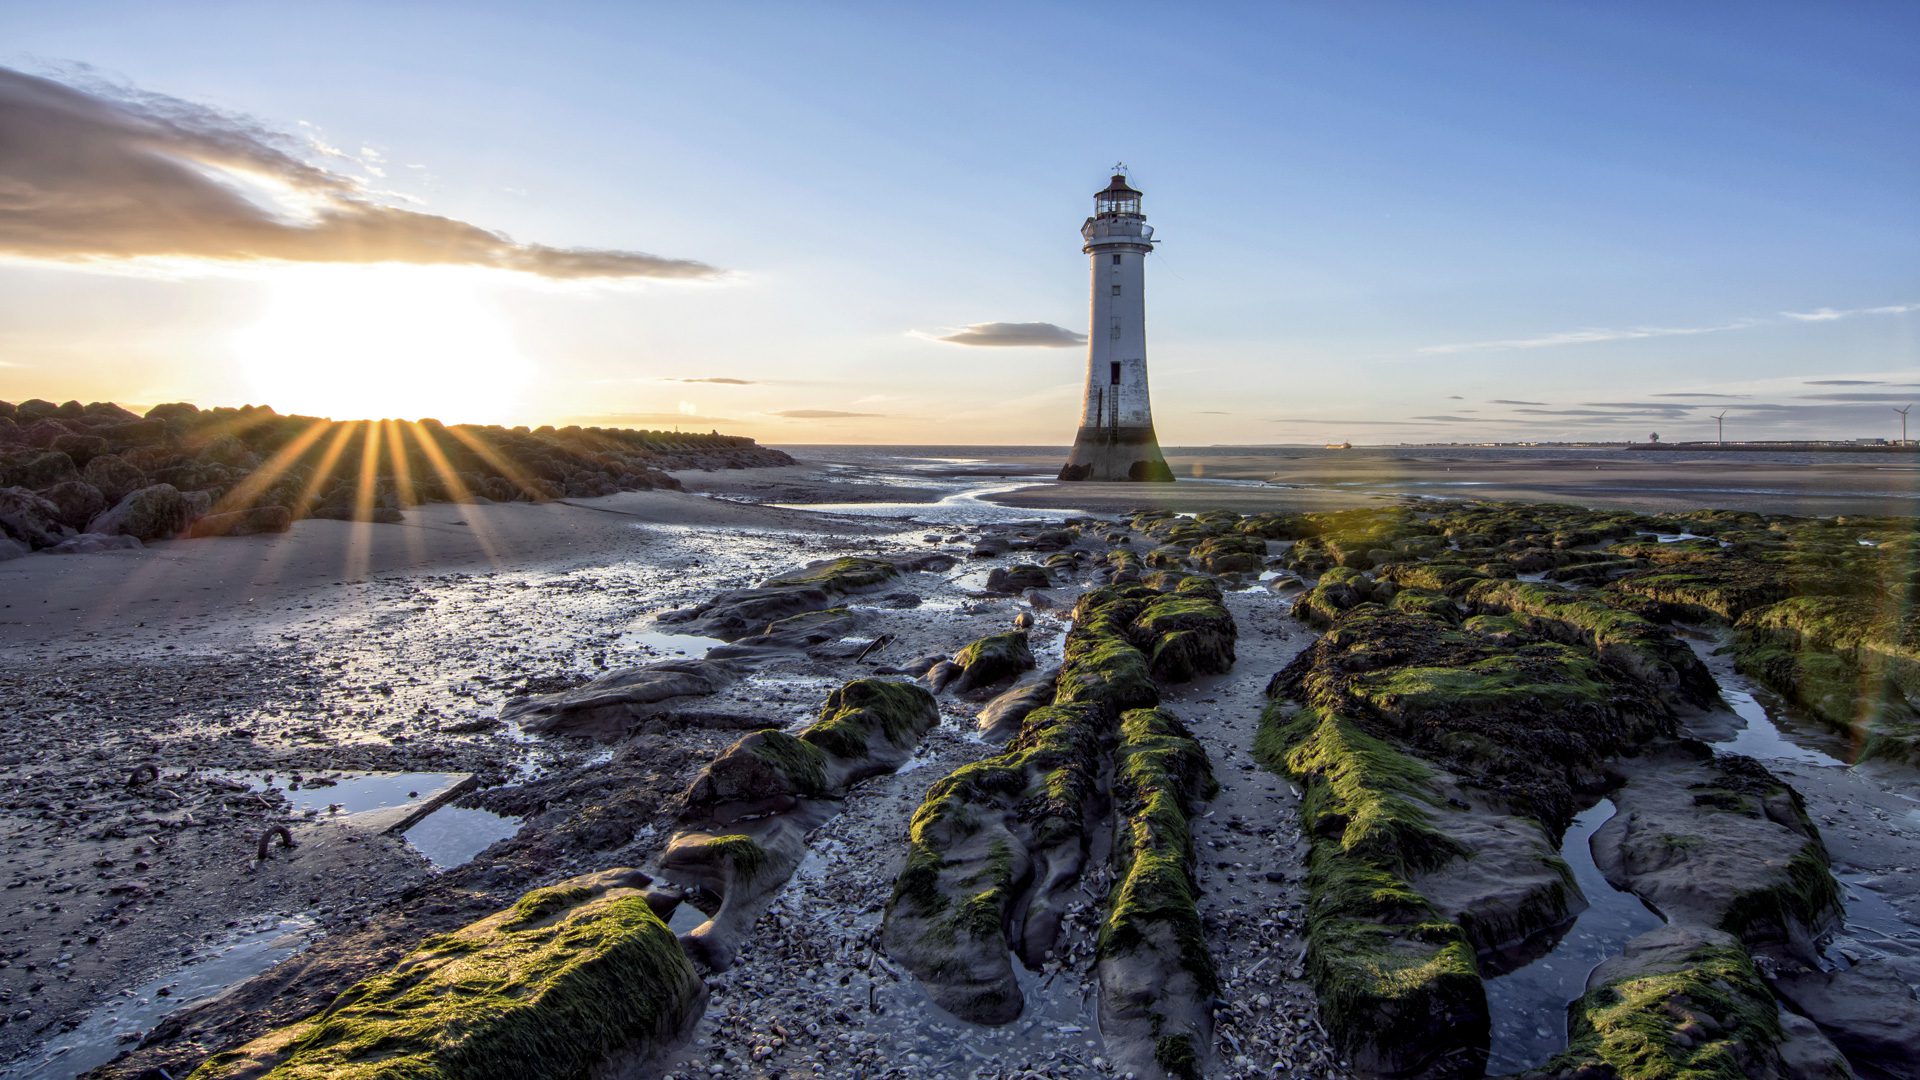 Perch Rock Lighthouse Sunset - New Brighton Wirral Merseyside UK